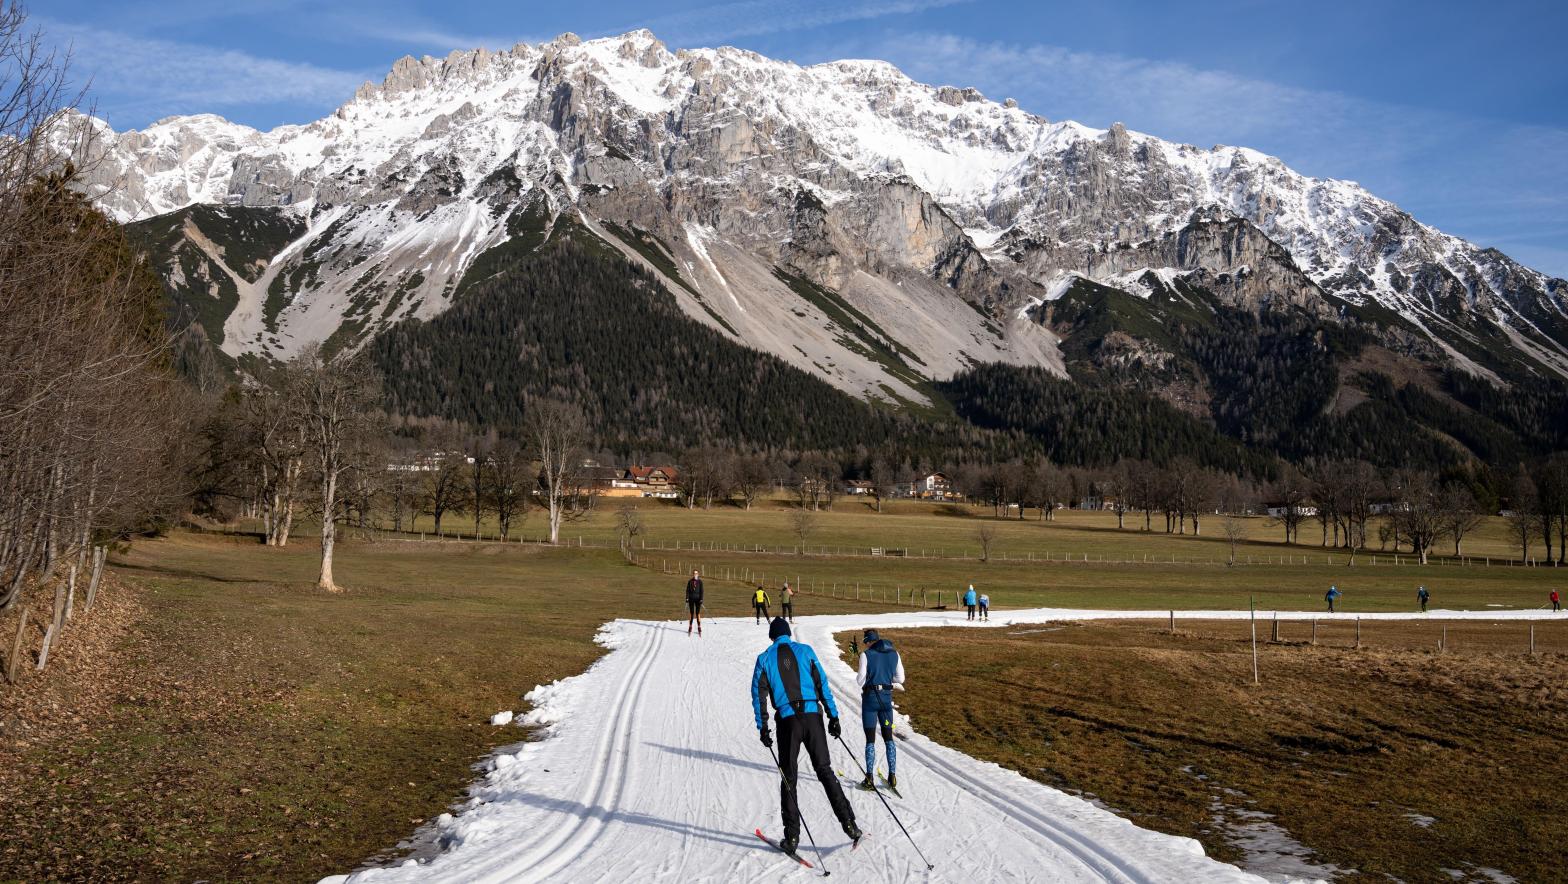 Cross-country skiiers on artificial snow in Ramsau am Dachstein, Austria.  (Photo: Daniel Kopatsch, Getty Images)